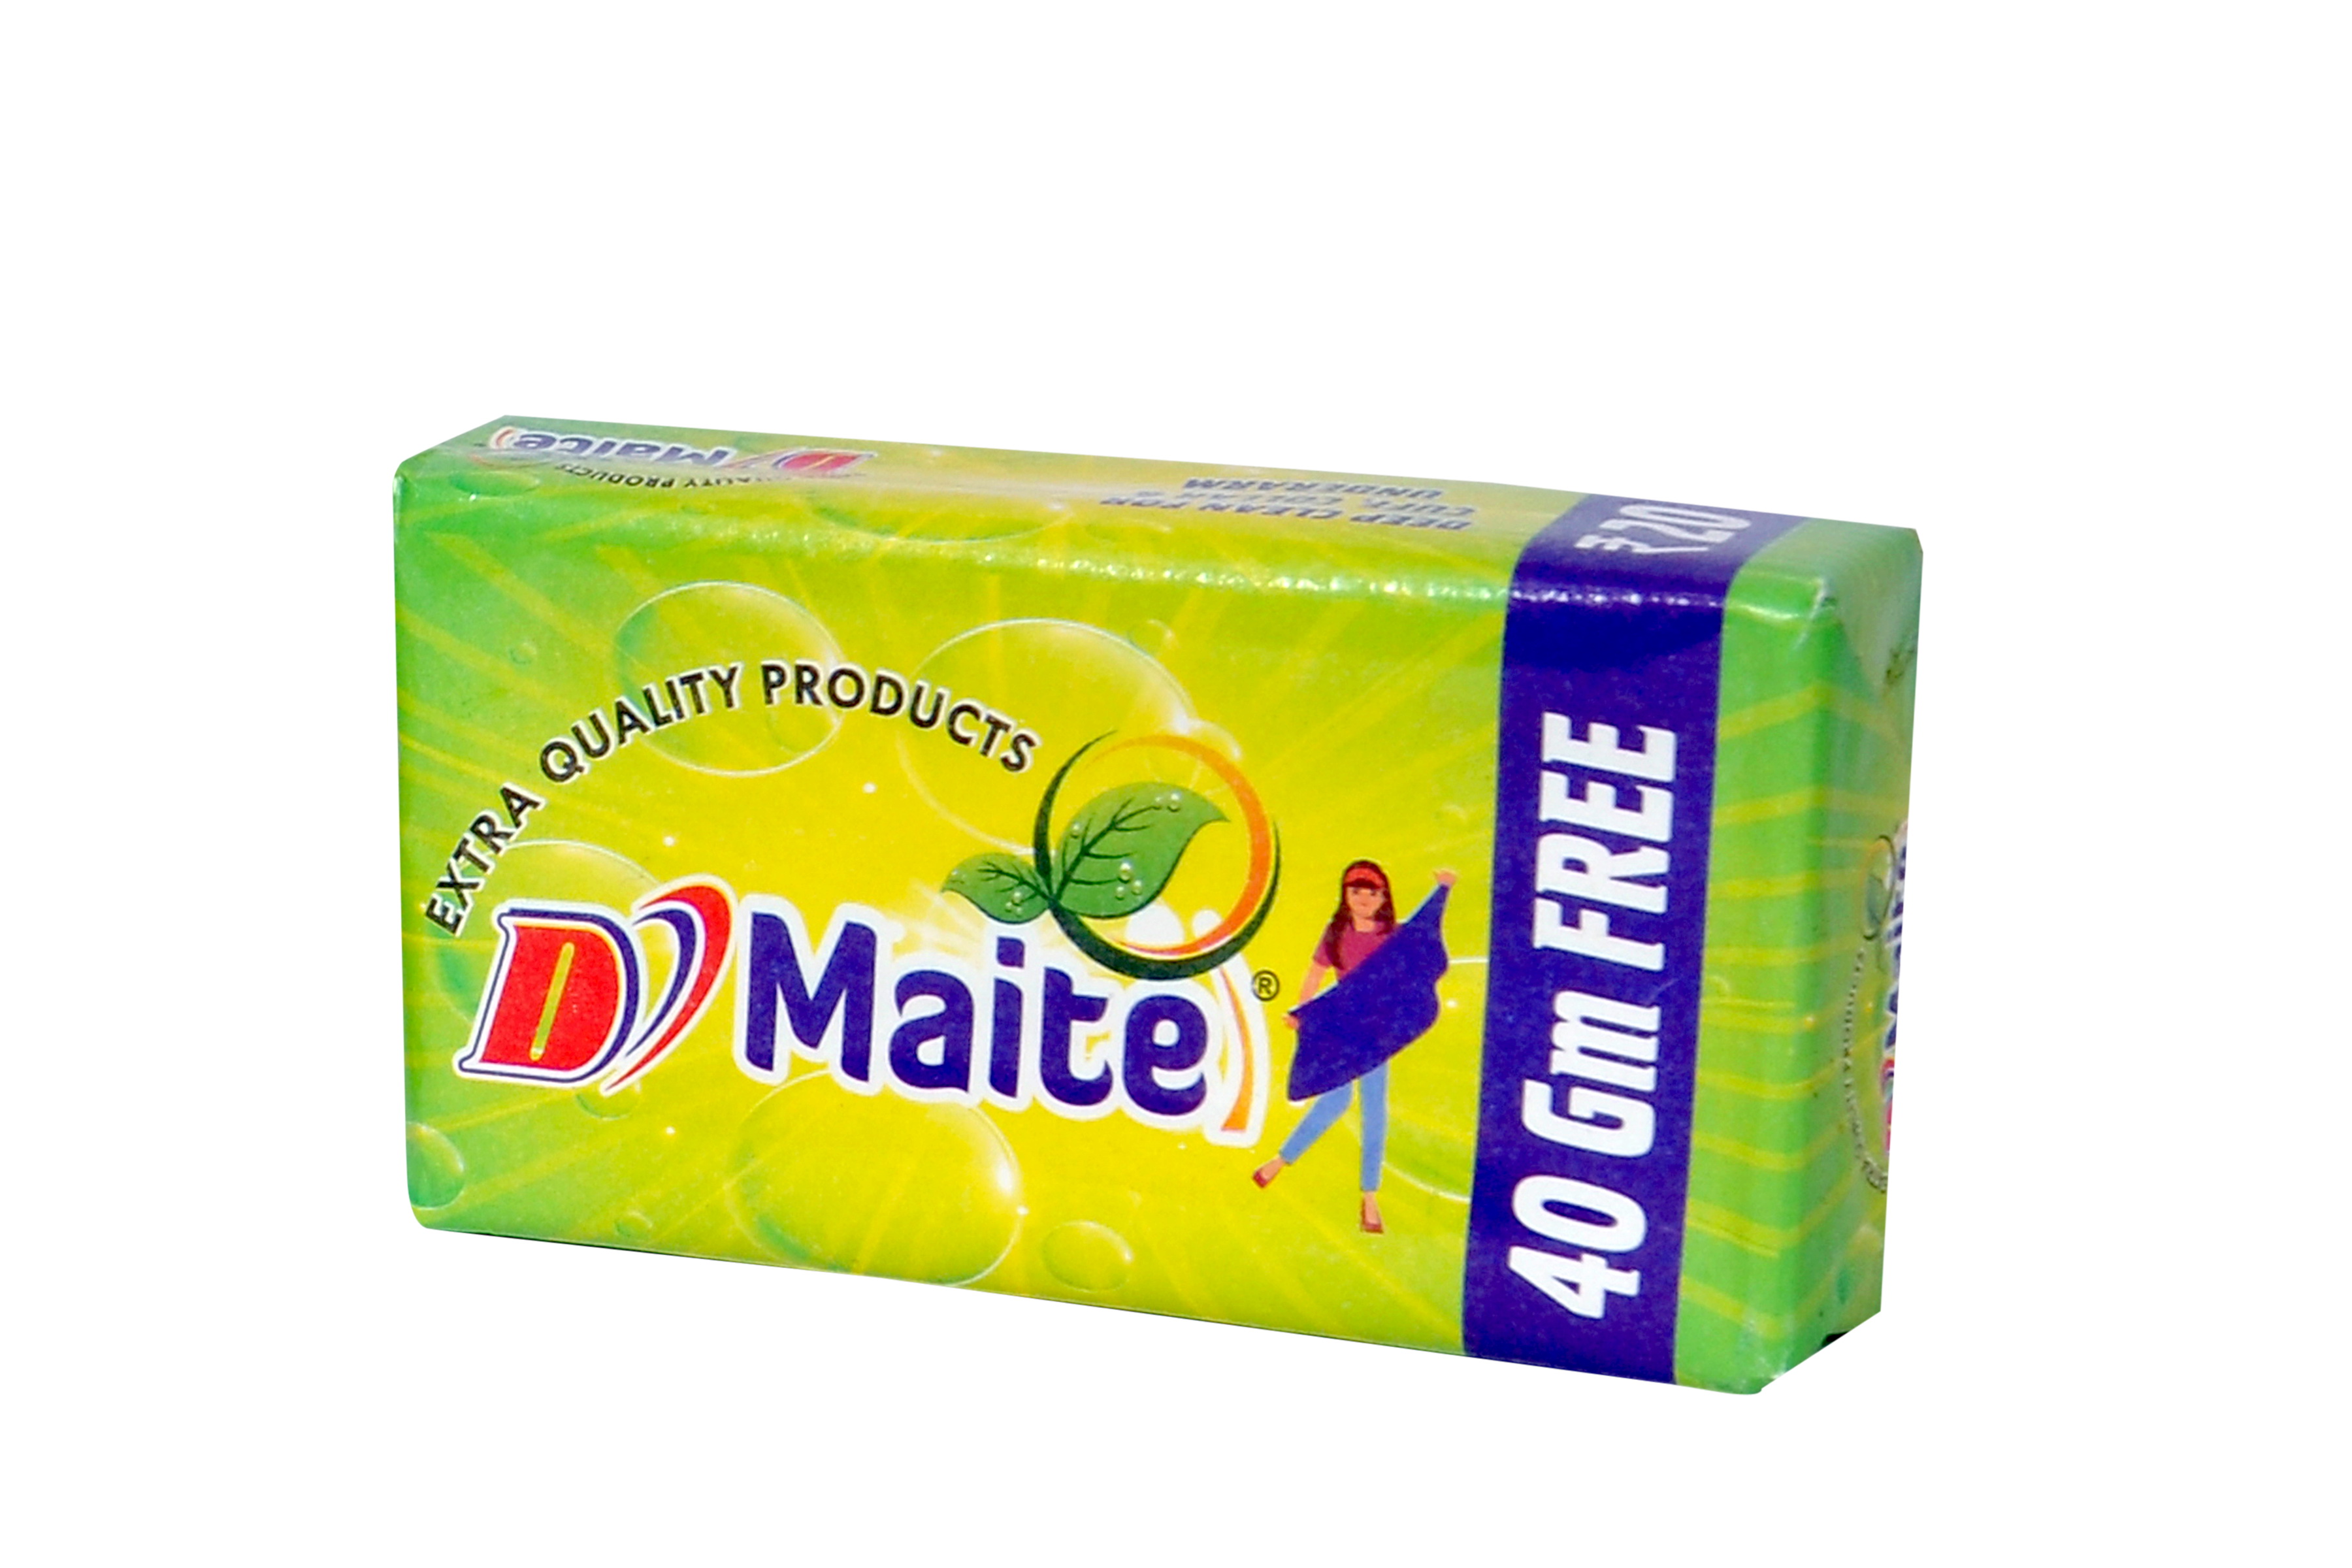 D-Maite Detergent Cake